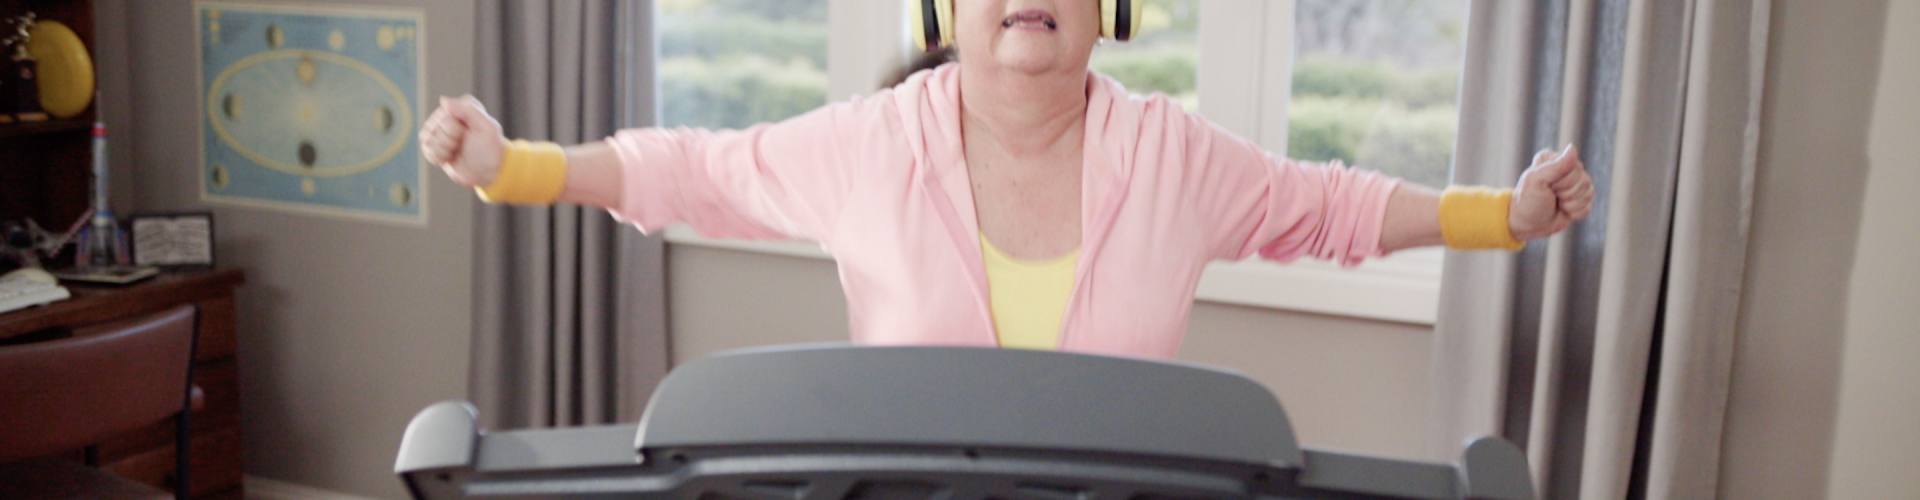 woman on treadmill